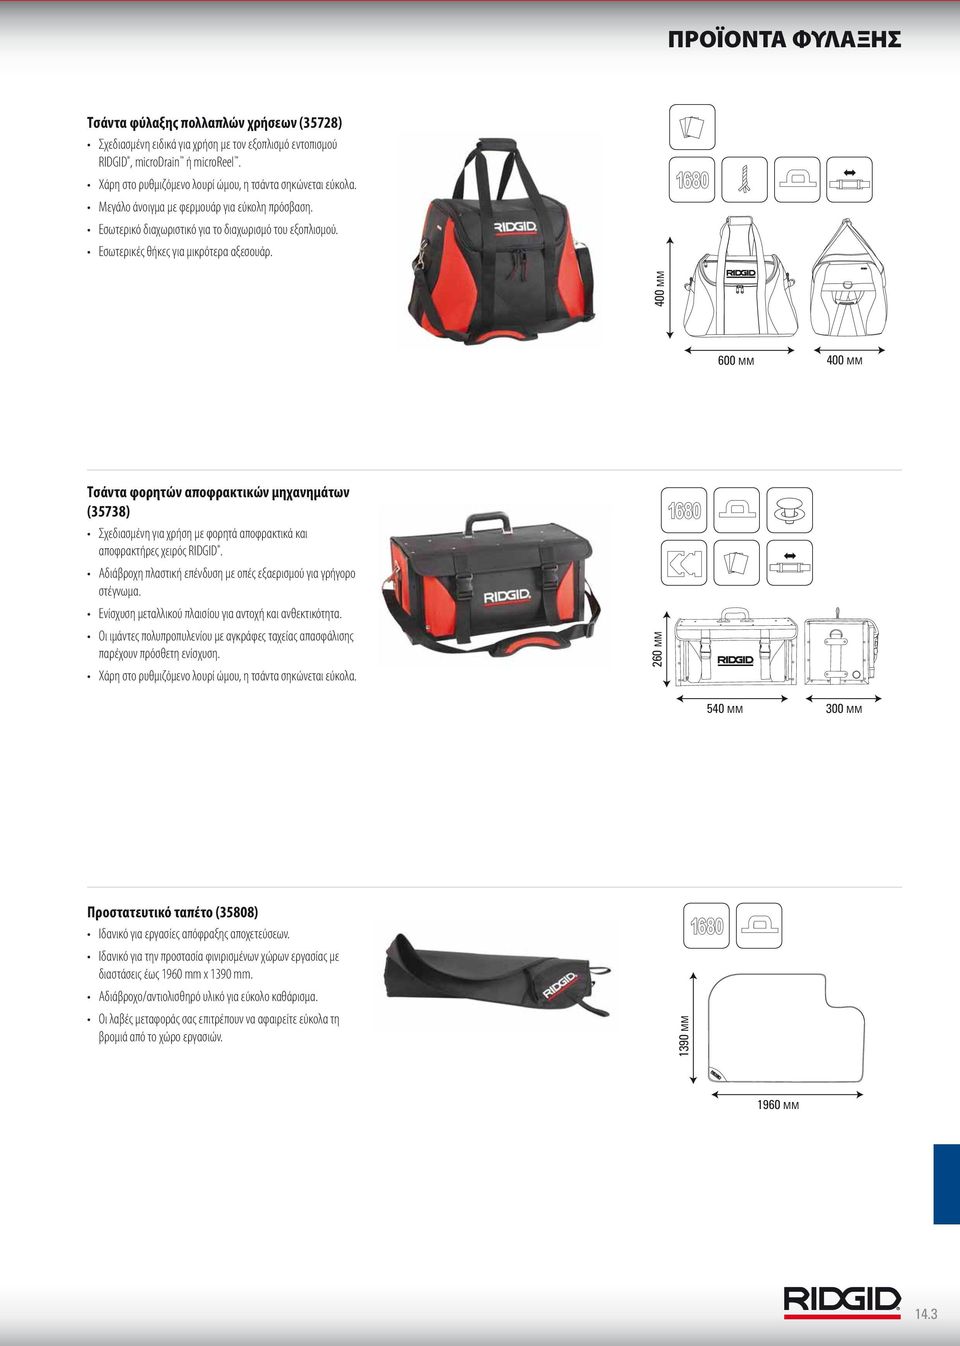 400 MM 600 MM Τσάντα φορητών αποφρακτικών μηχανημάτων (35738) Σχεδιασμένη για χρήση με φορητά αποφρακτικά και αποφρακτήρες χειρός RIDGID.